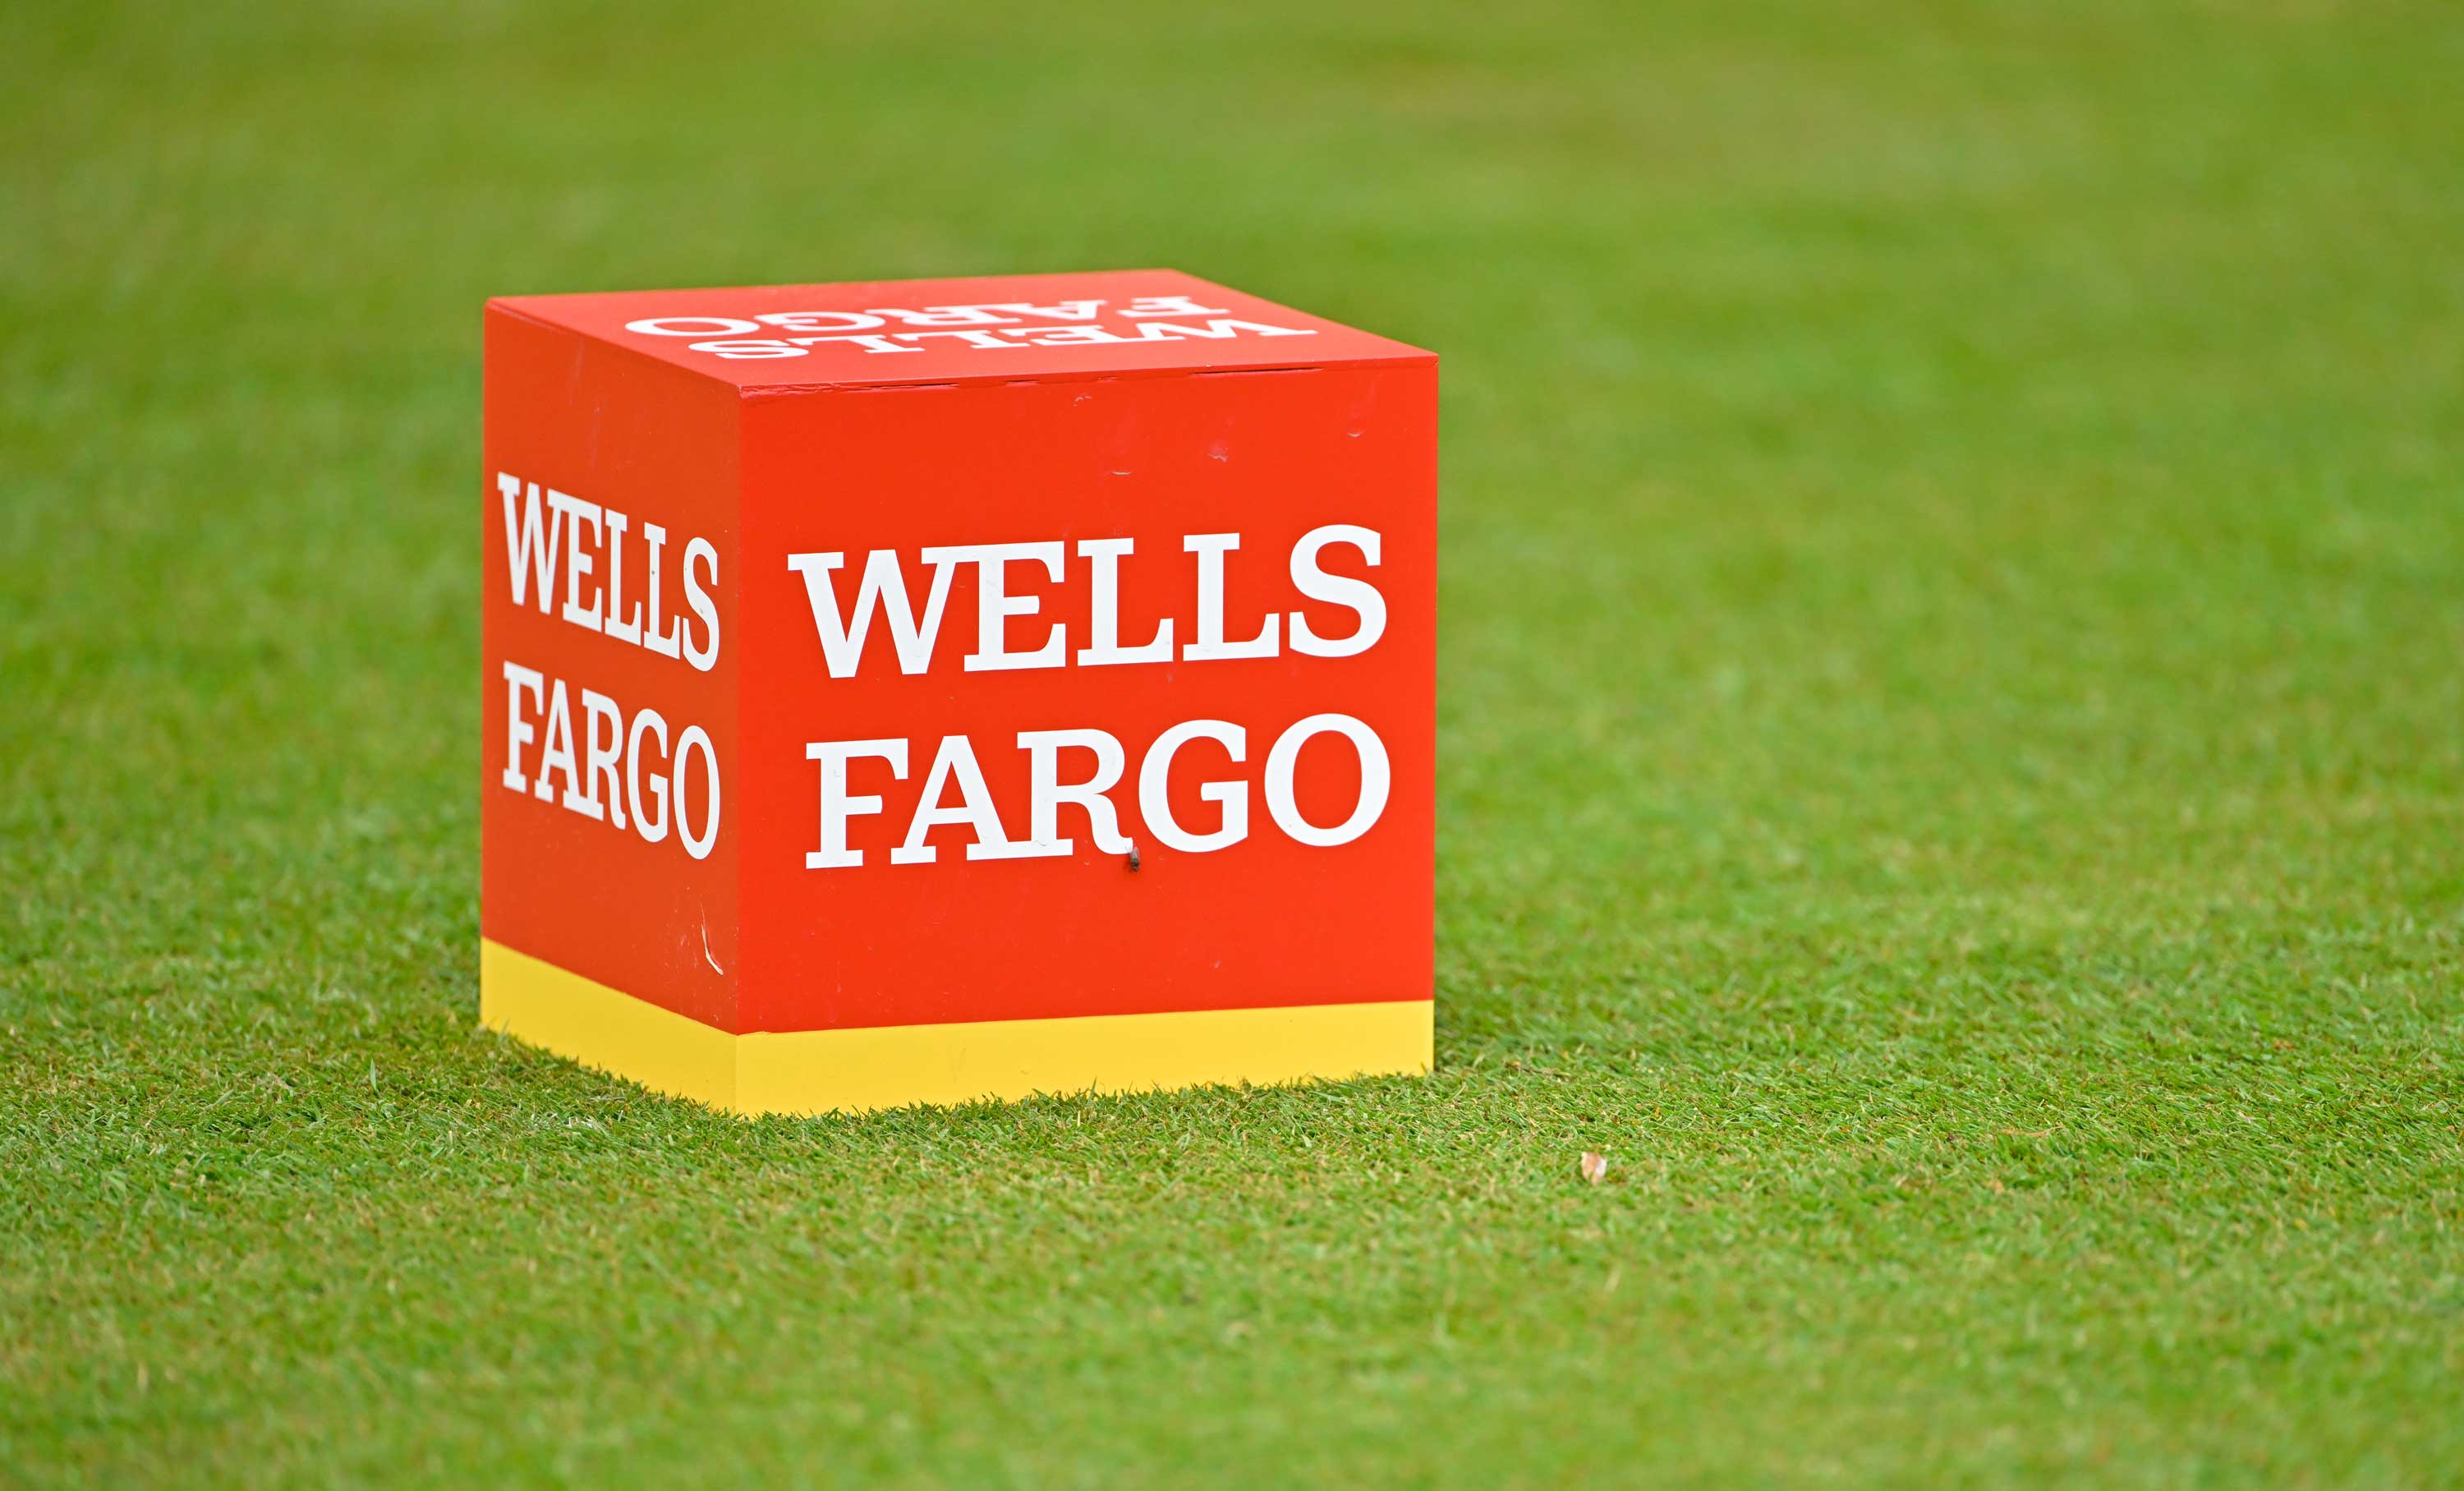 Wells Fargo Championship 2023: Prize purse, payout info, field